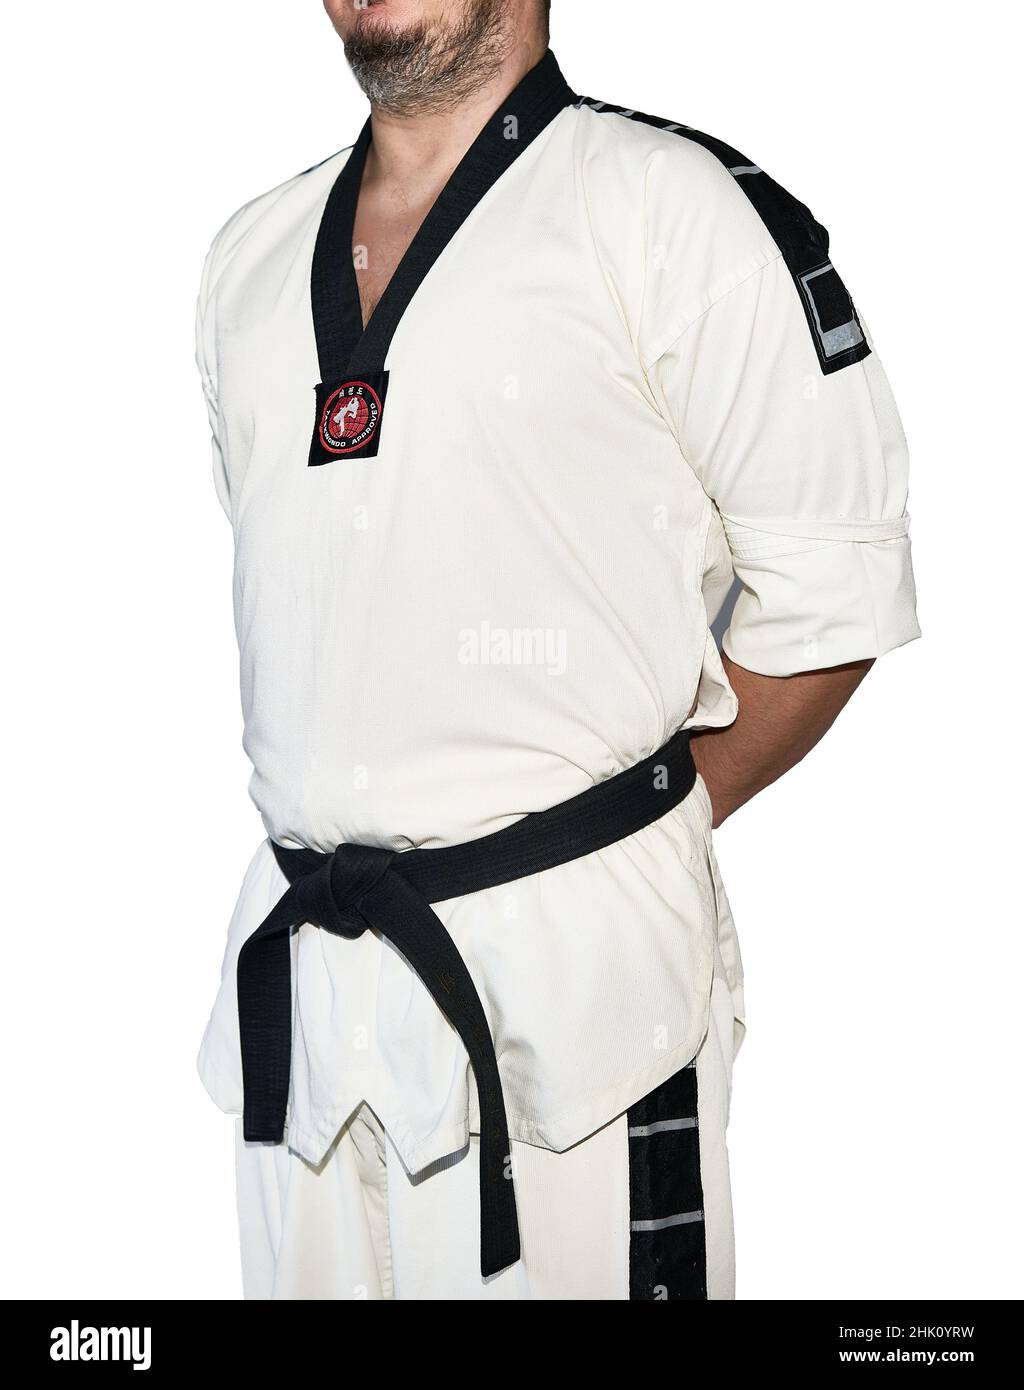 Cinturón de taekwondo fotografías e imágenes de alta resolución - Página 2  - Alamy